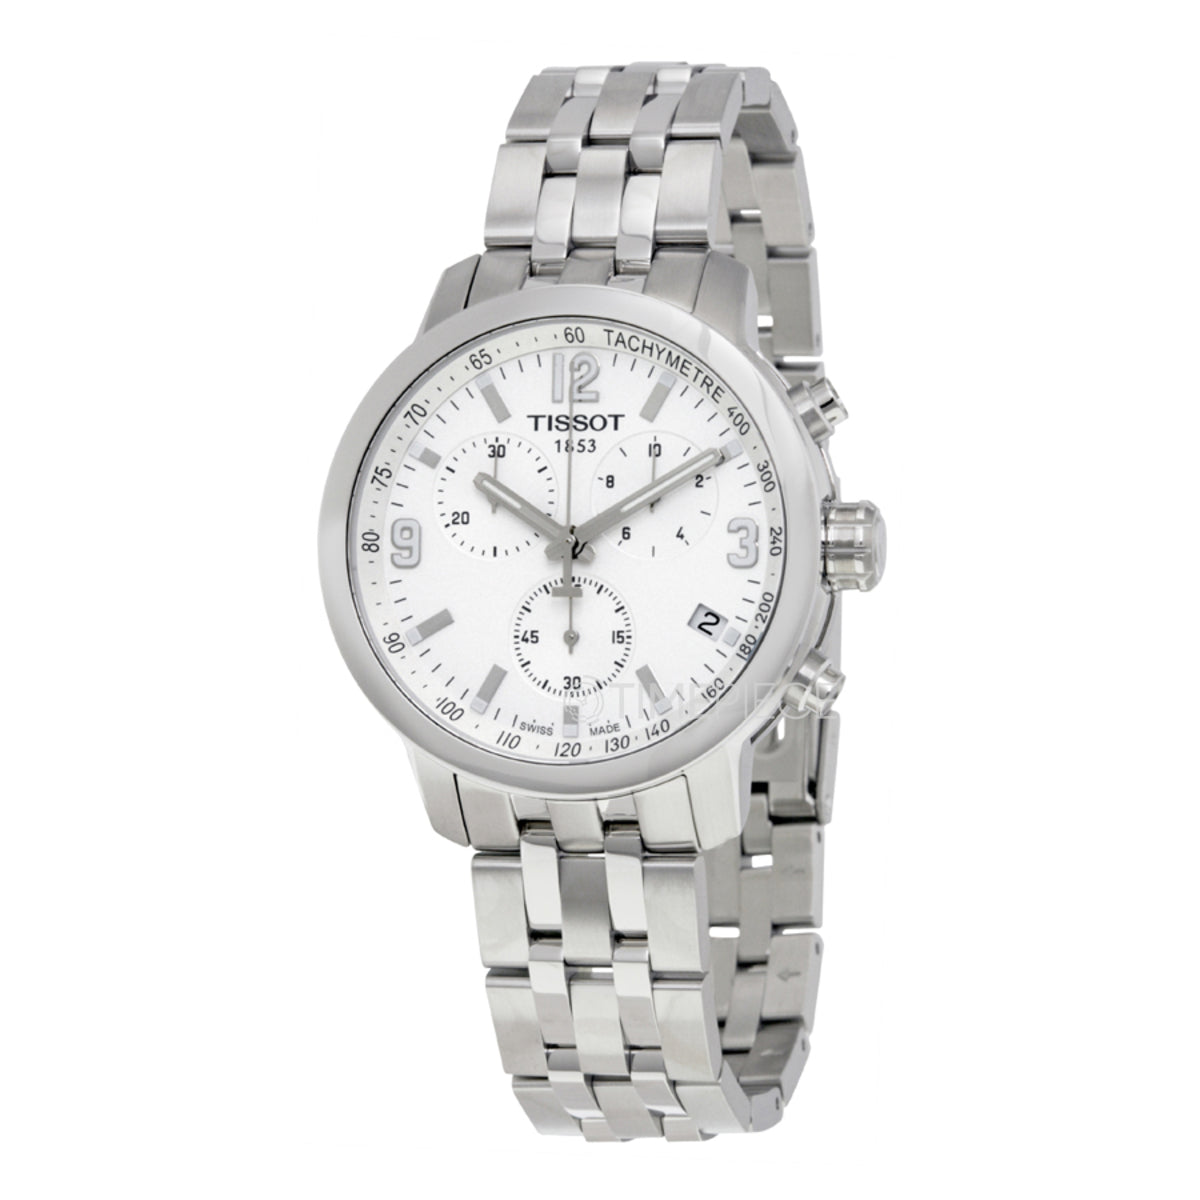 Tissot PRC 200 Chronograph White Dial Silver Steel Strap Watch For Men - T055.417.11.017.00